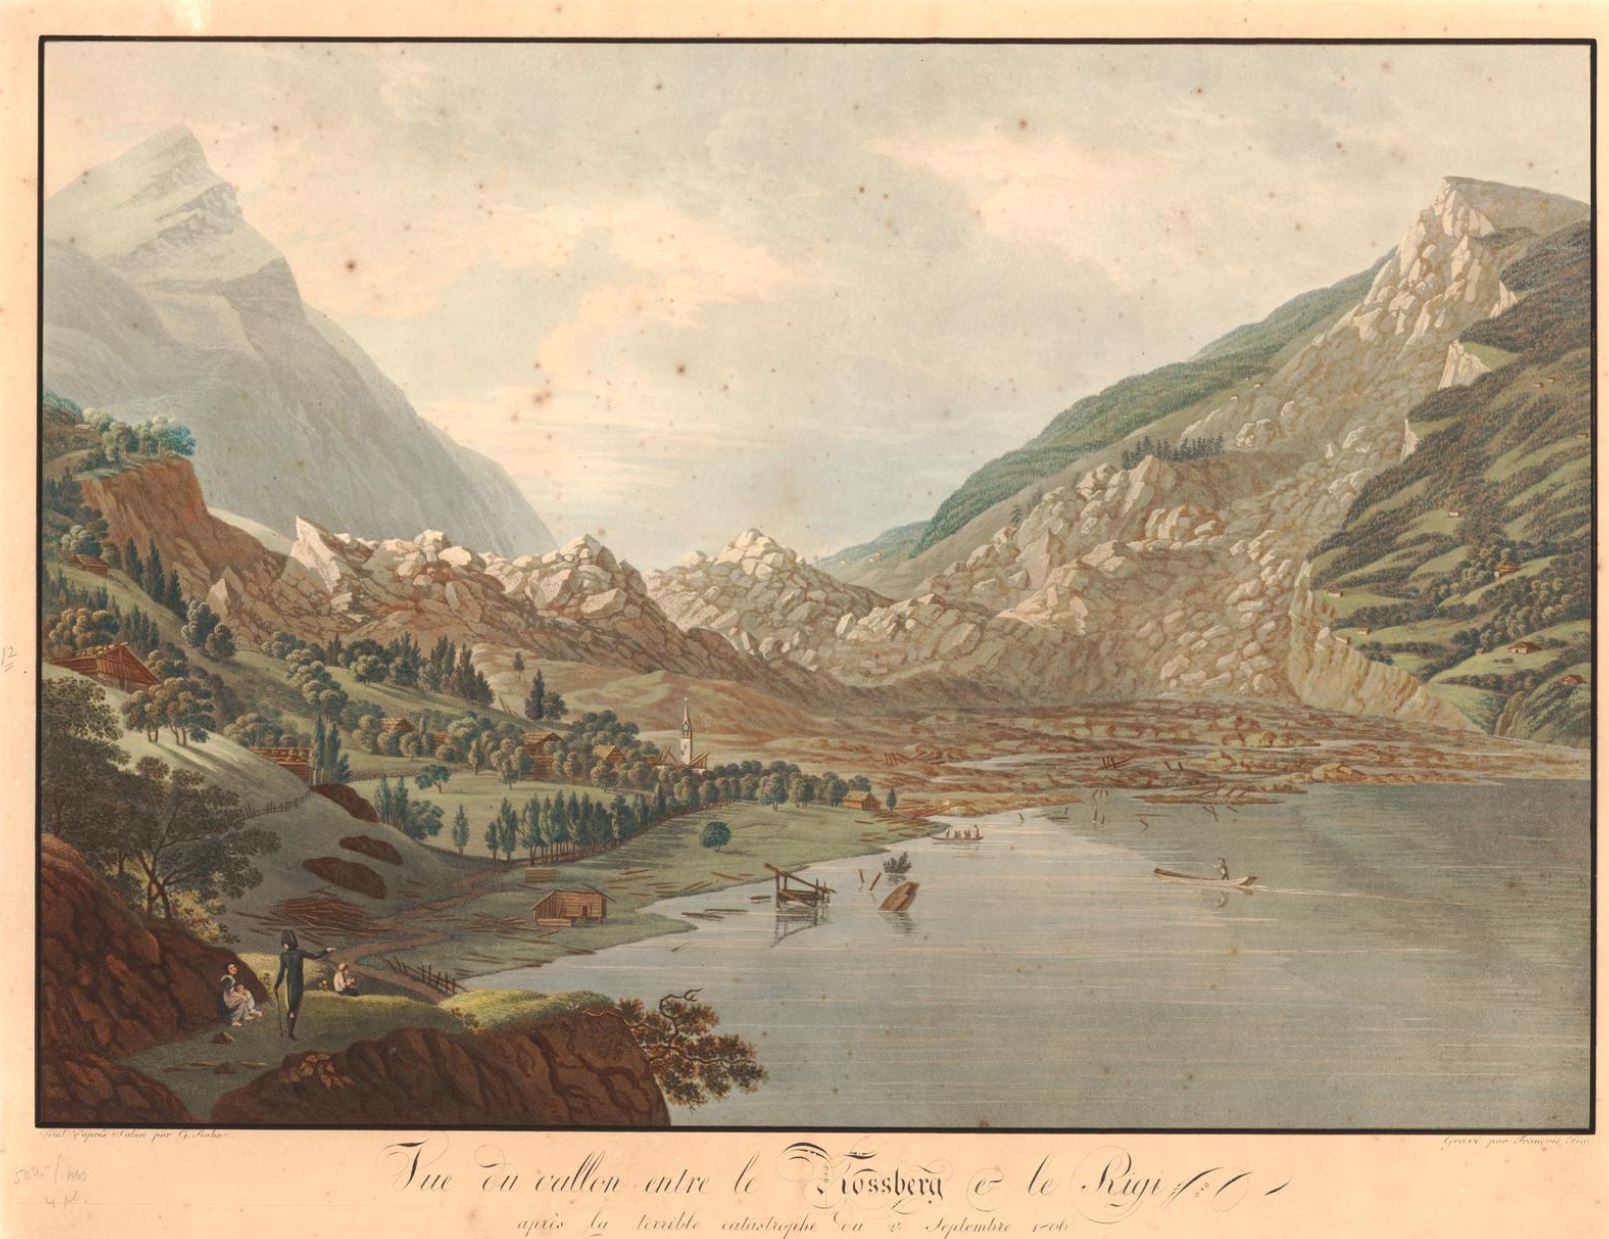 1806 landslide near Rossberg